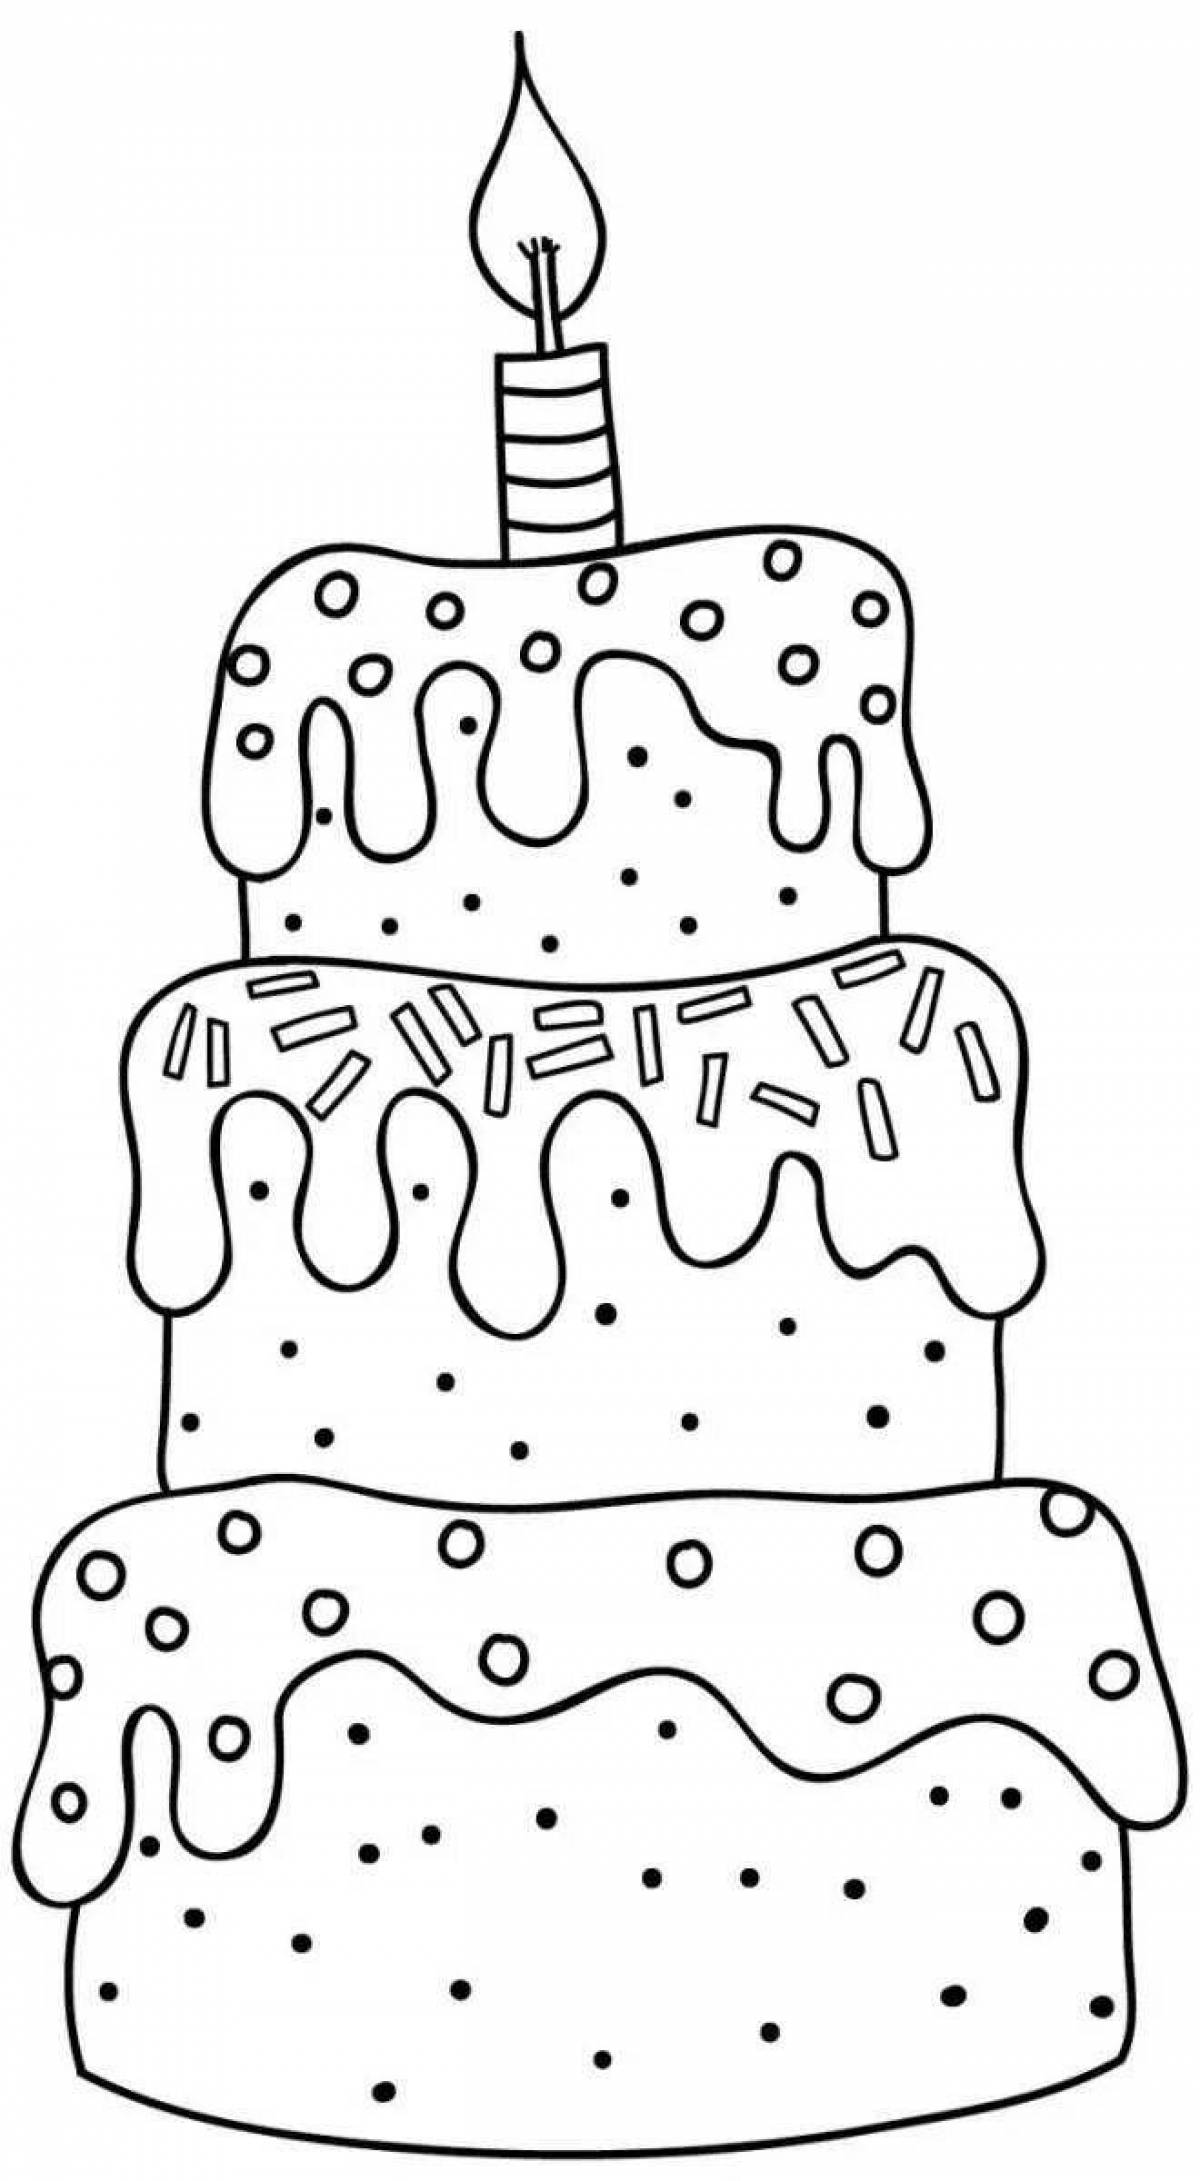 Coloring page joyful birthday cake